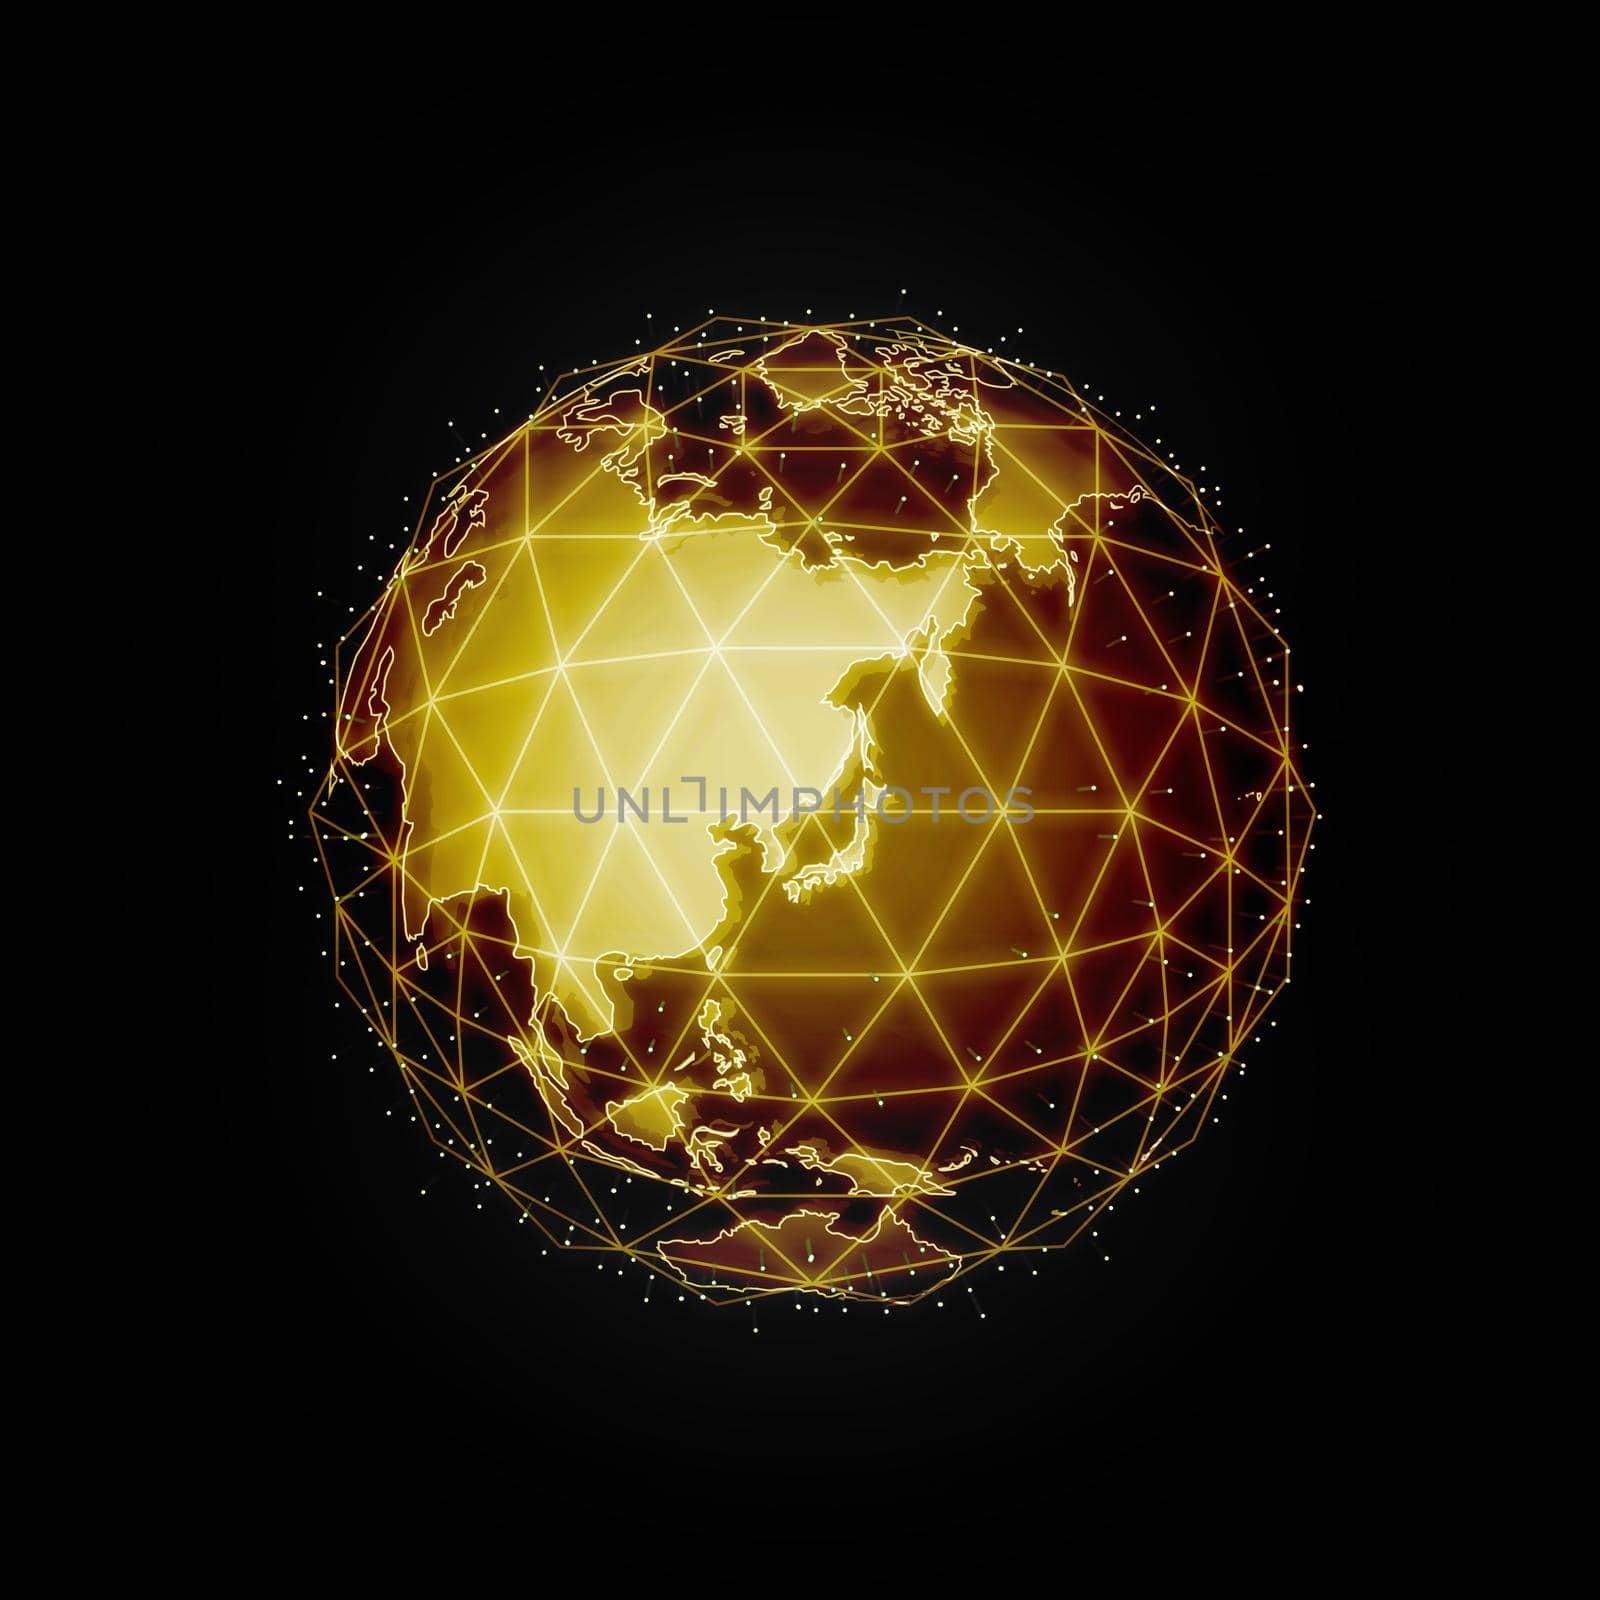 Digital earth illustration ( global network, technology motif )